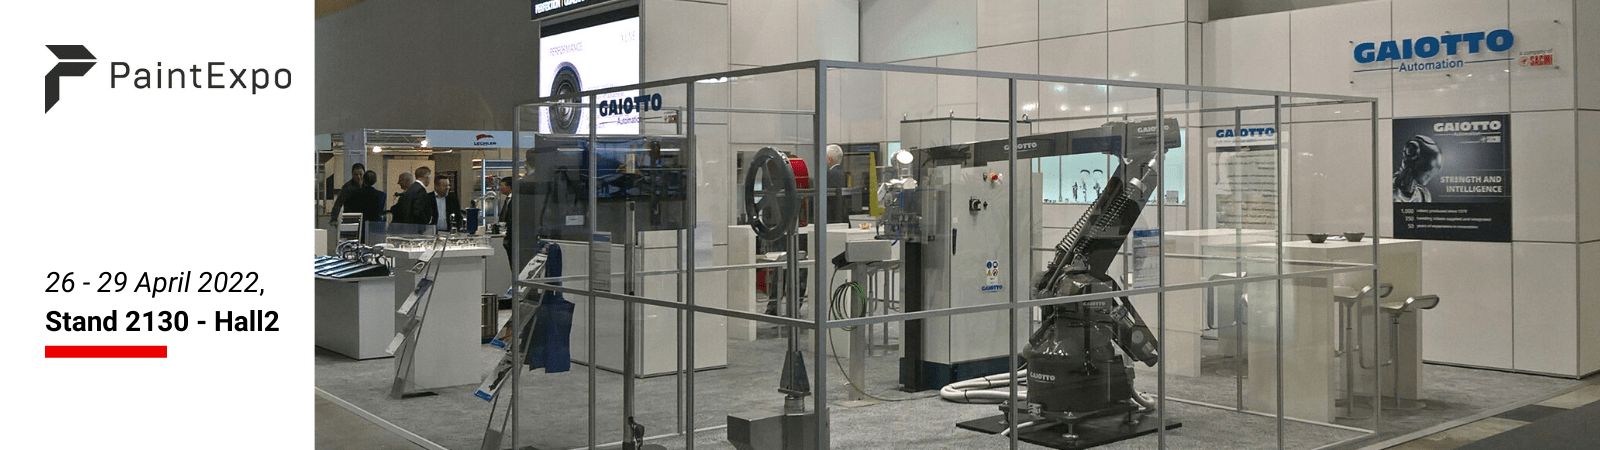 SACMI-Gaiotto robotic coating to play starring role at PaintExpo 2022